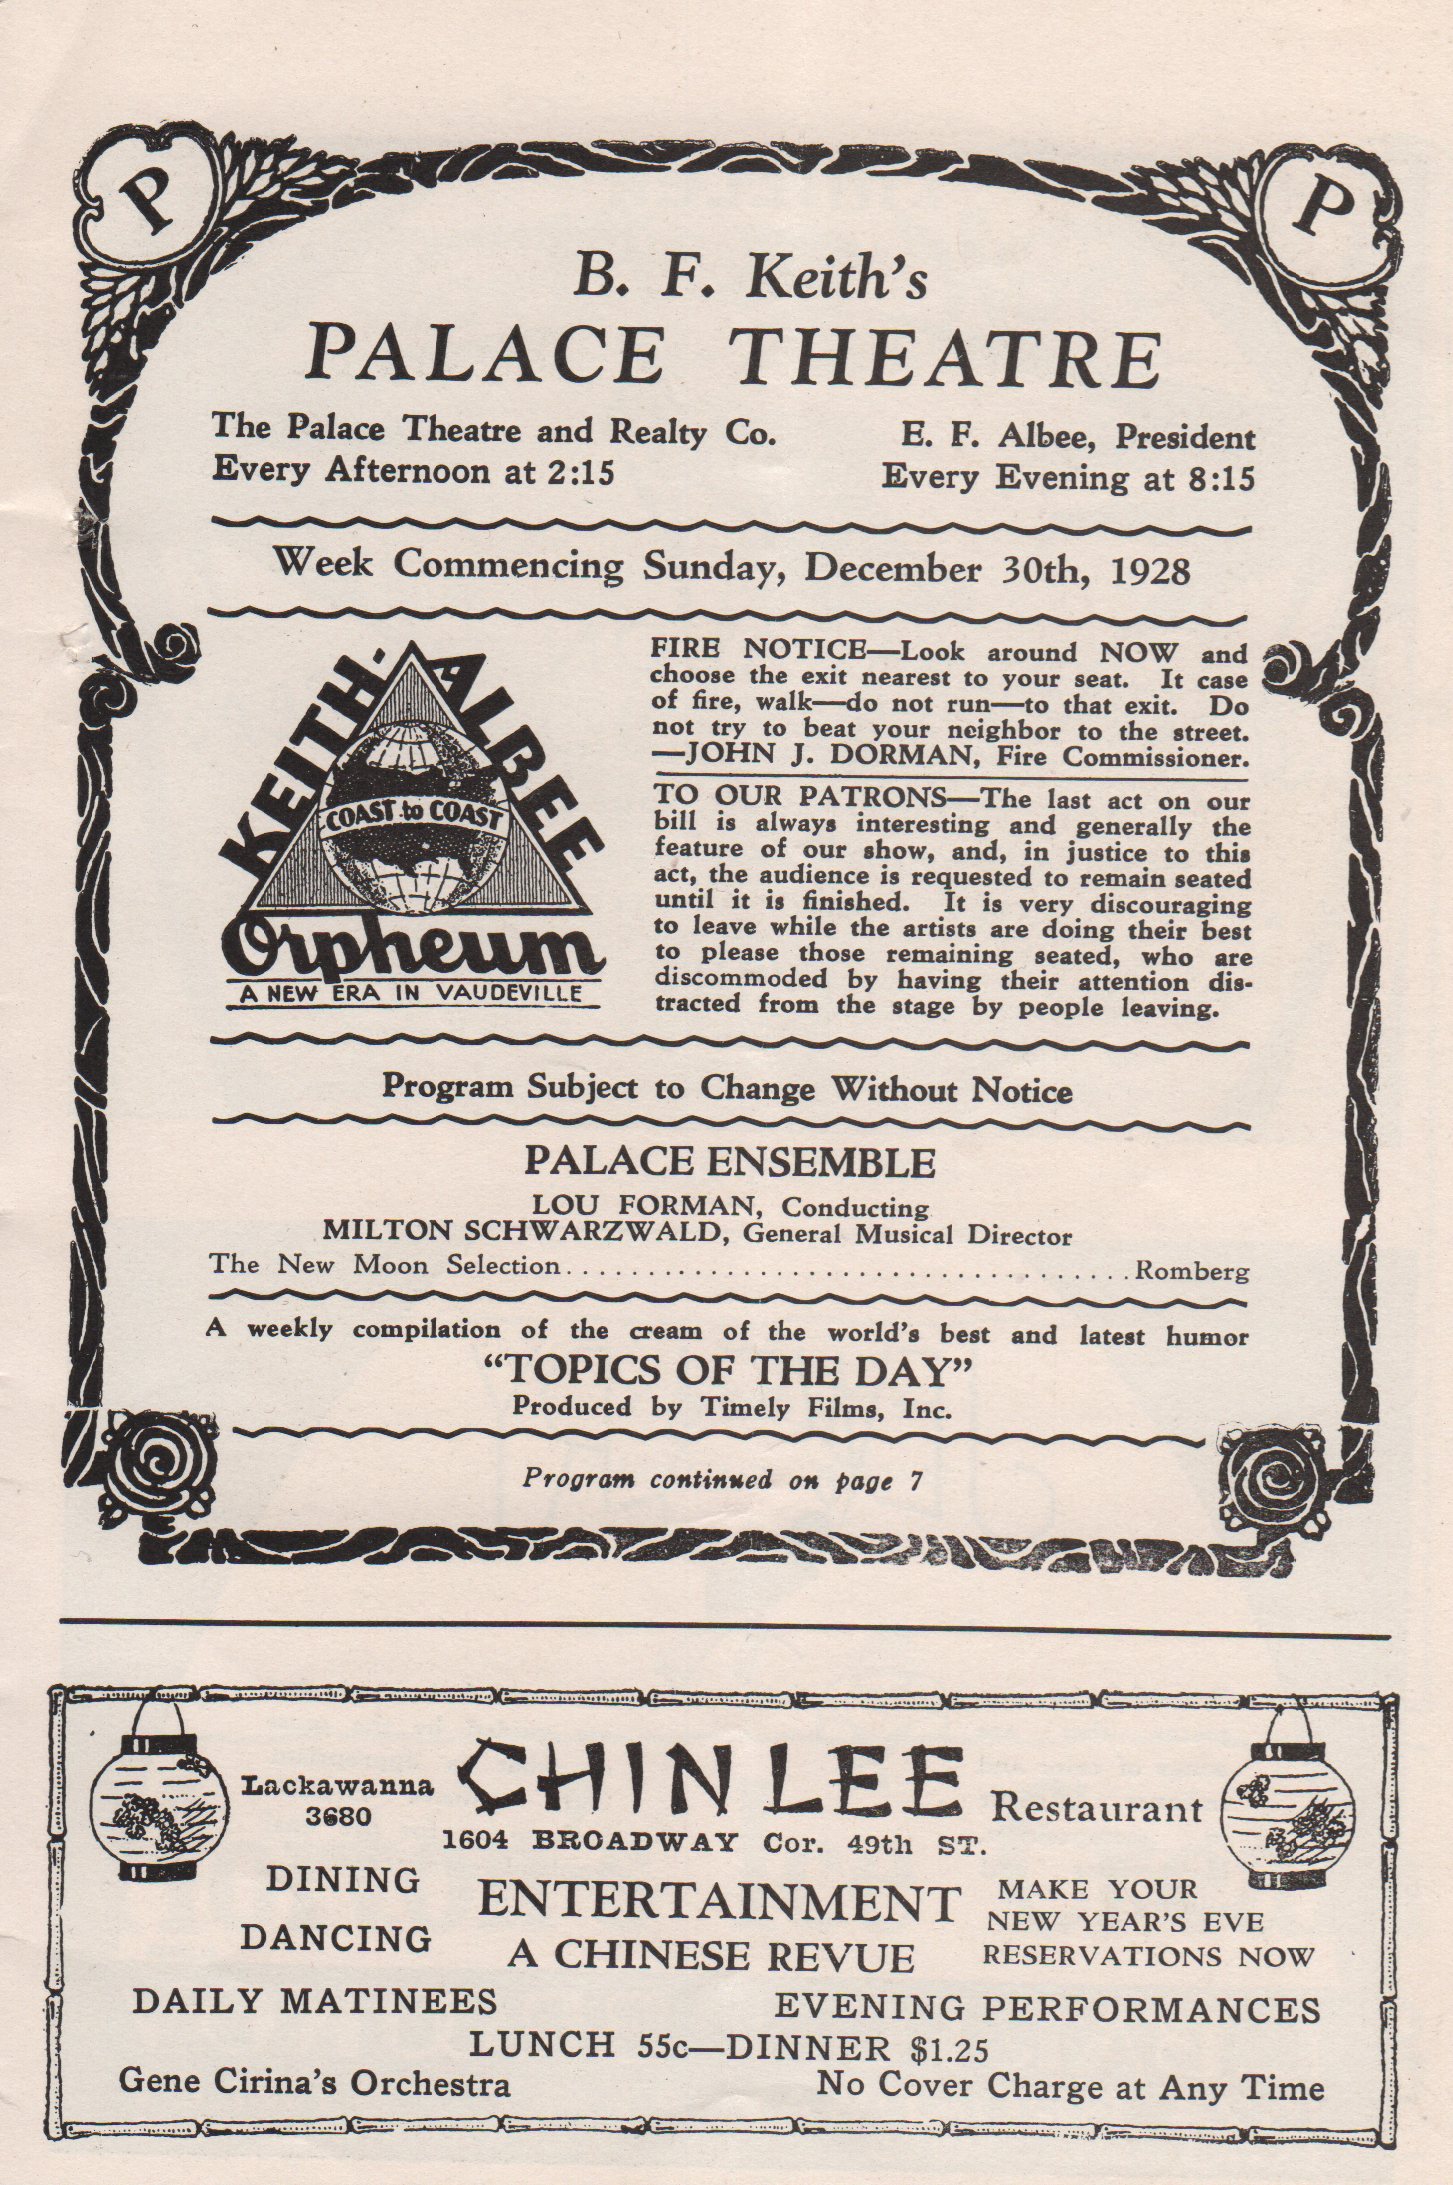 B. F. Keith’s Palace Theatre, NYC (1928)-Program